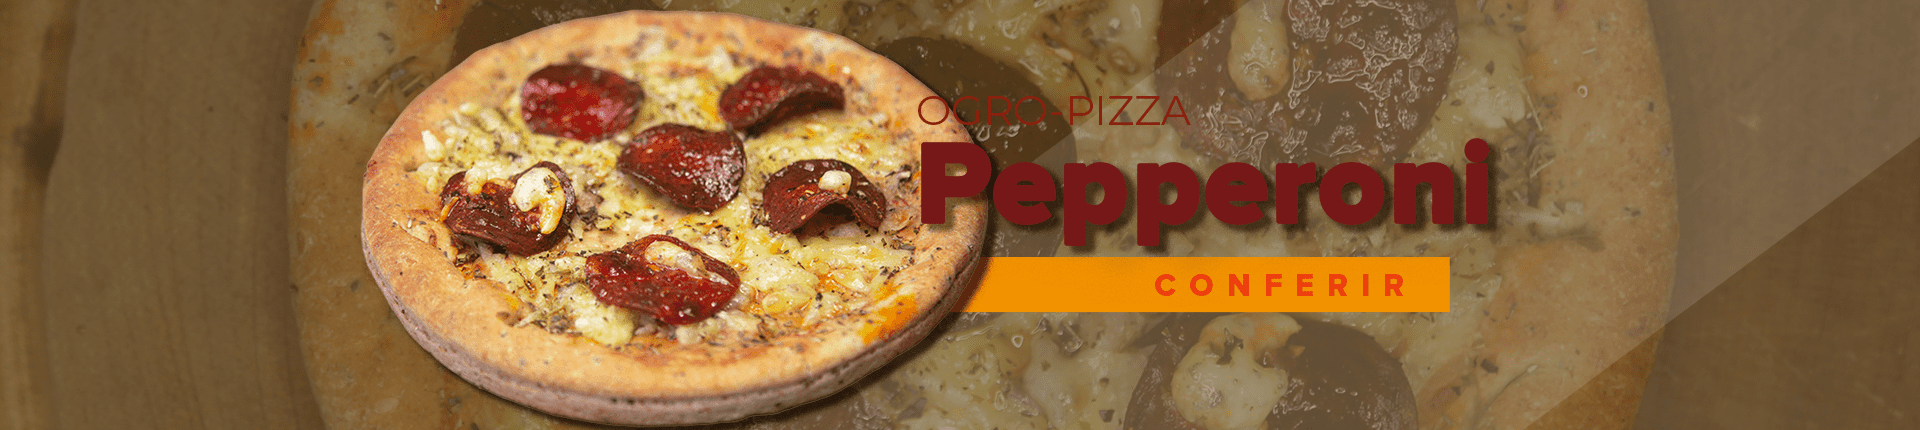 Ogro-Pizza Pepperoni